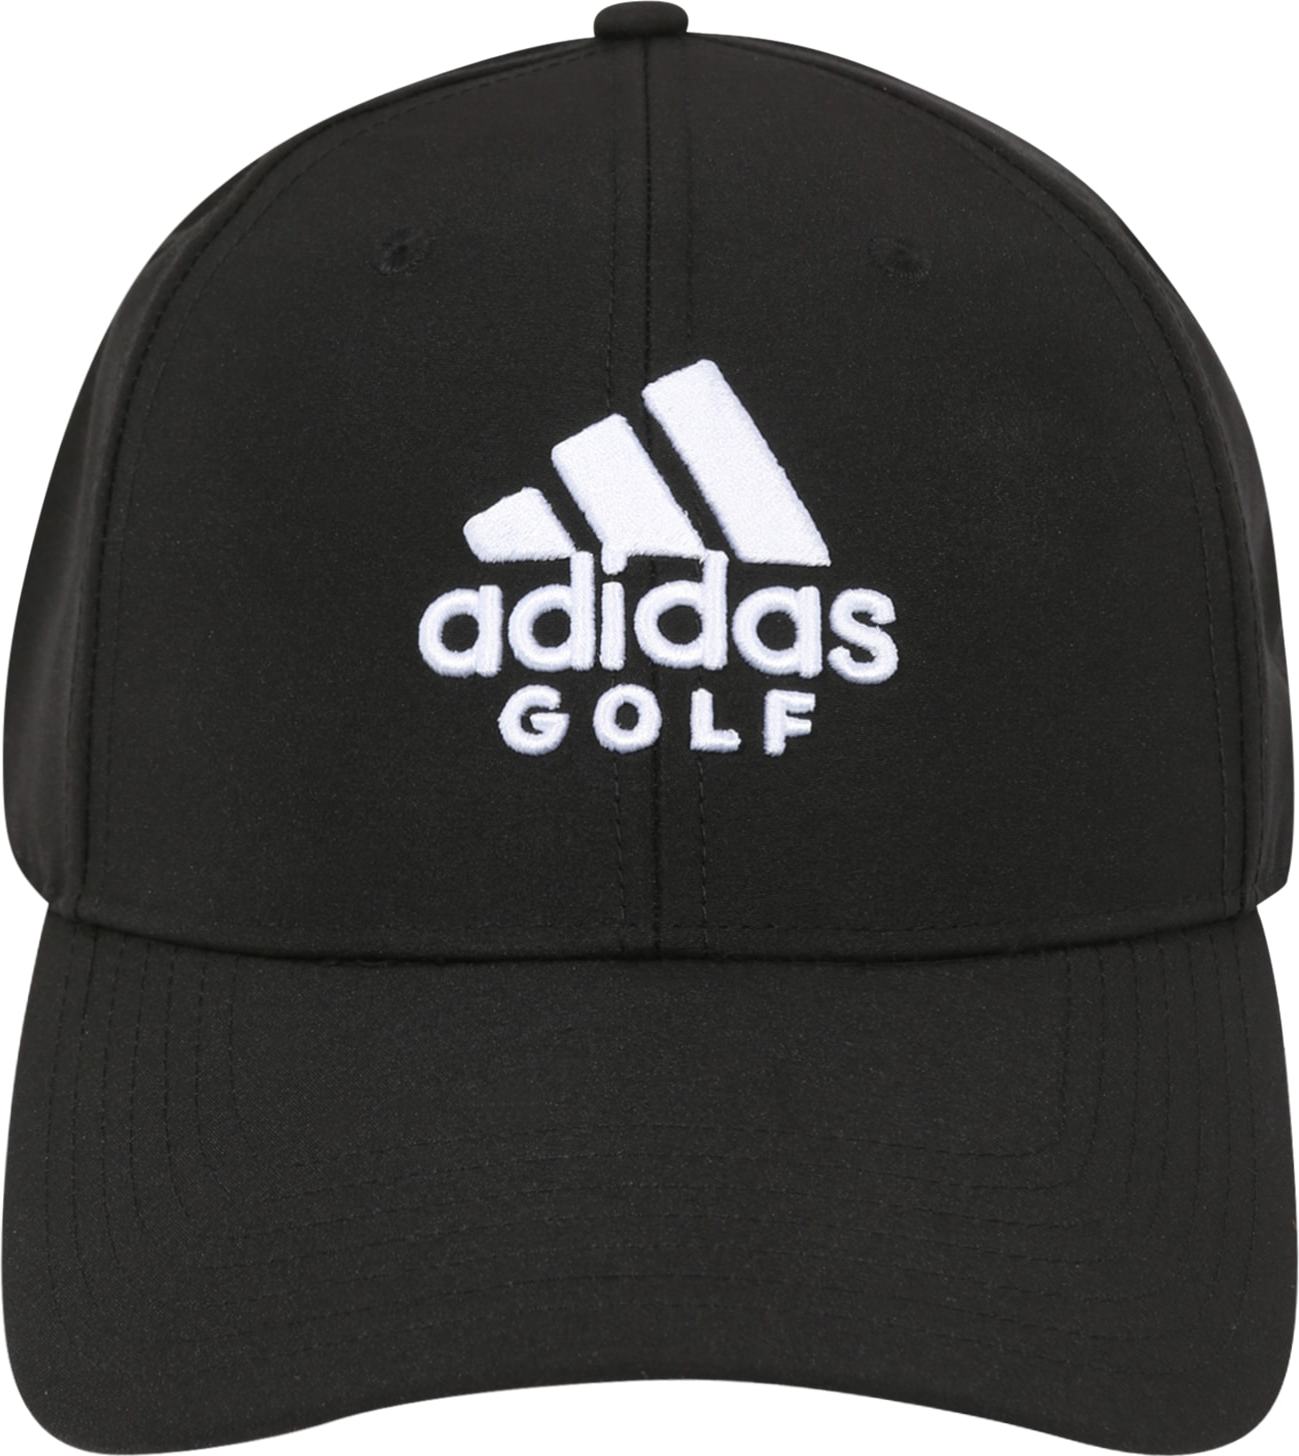 adidas Golf Sportovní kšiltovka černá / bílá